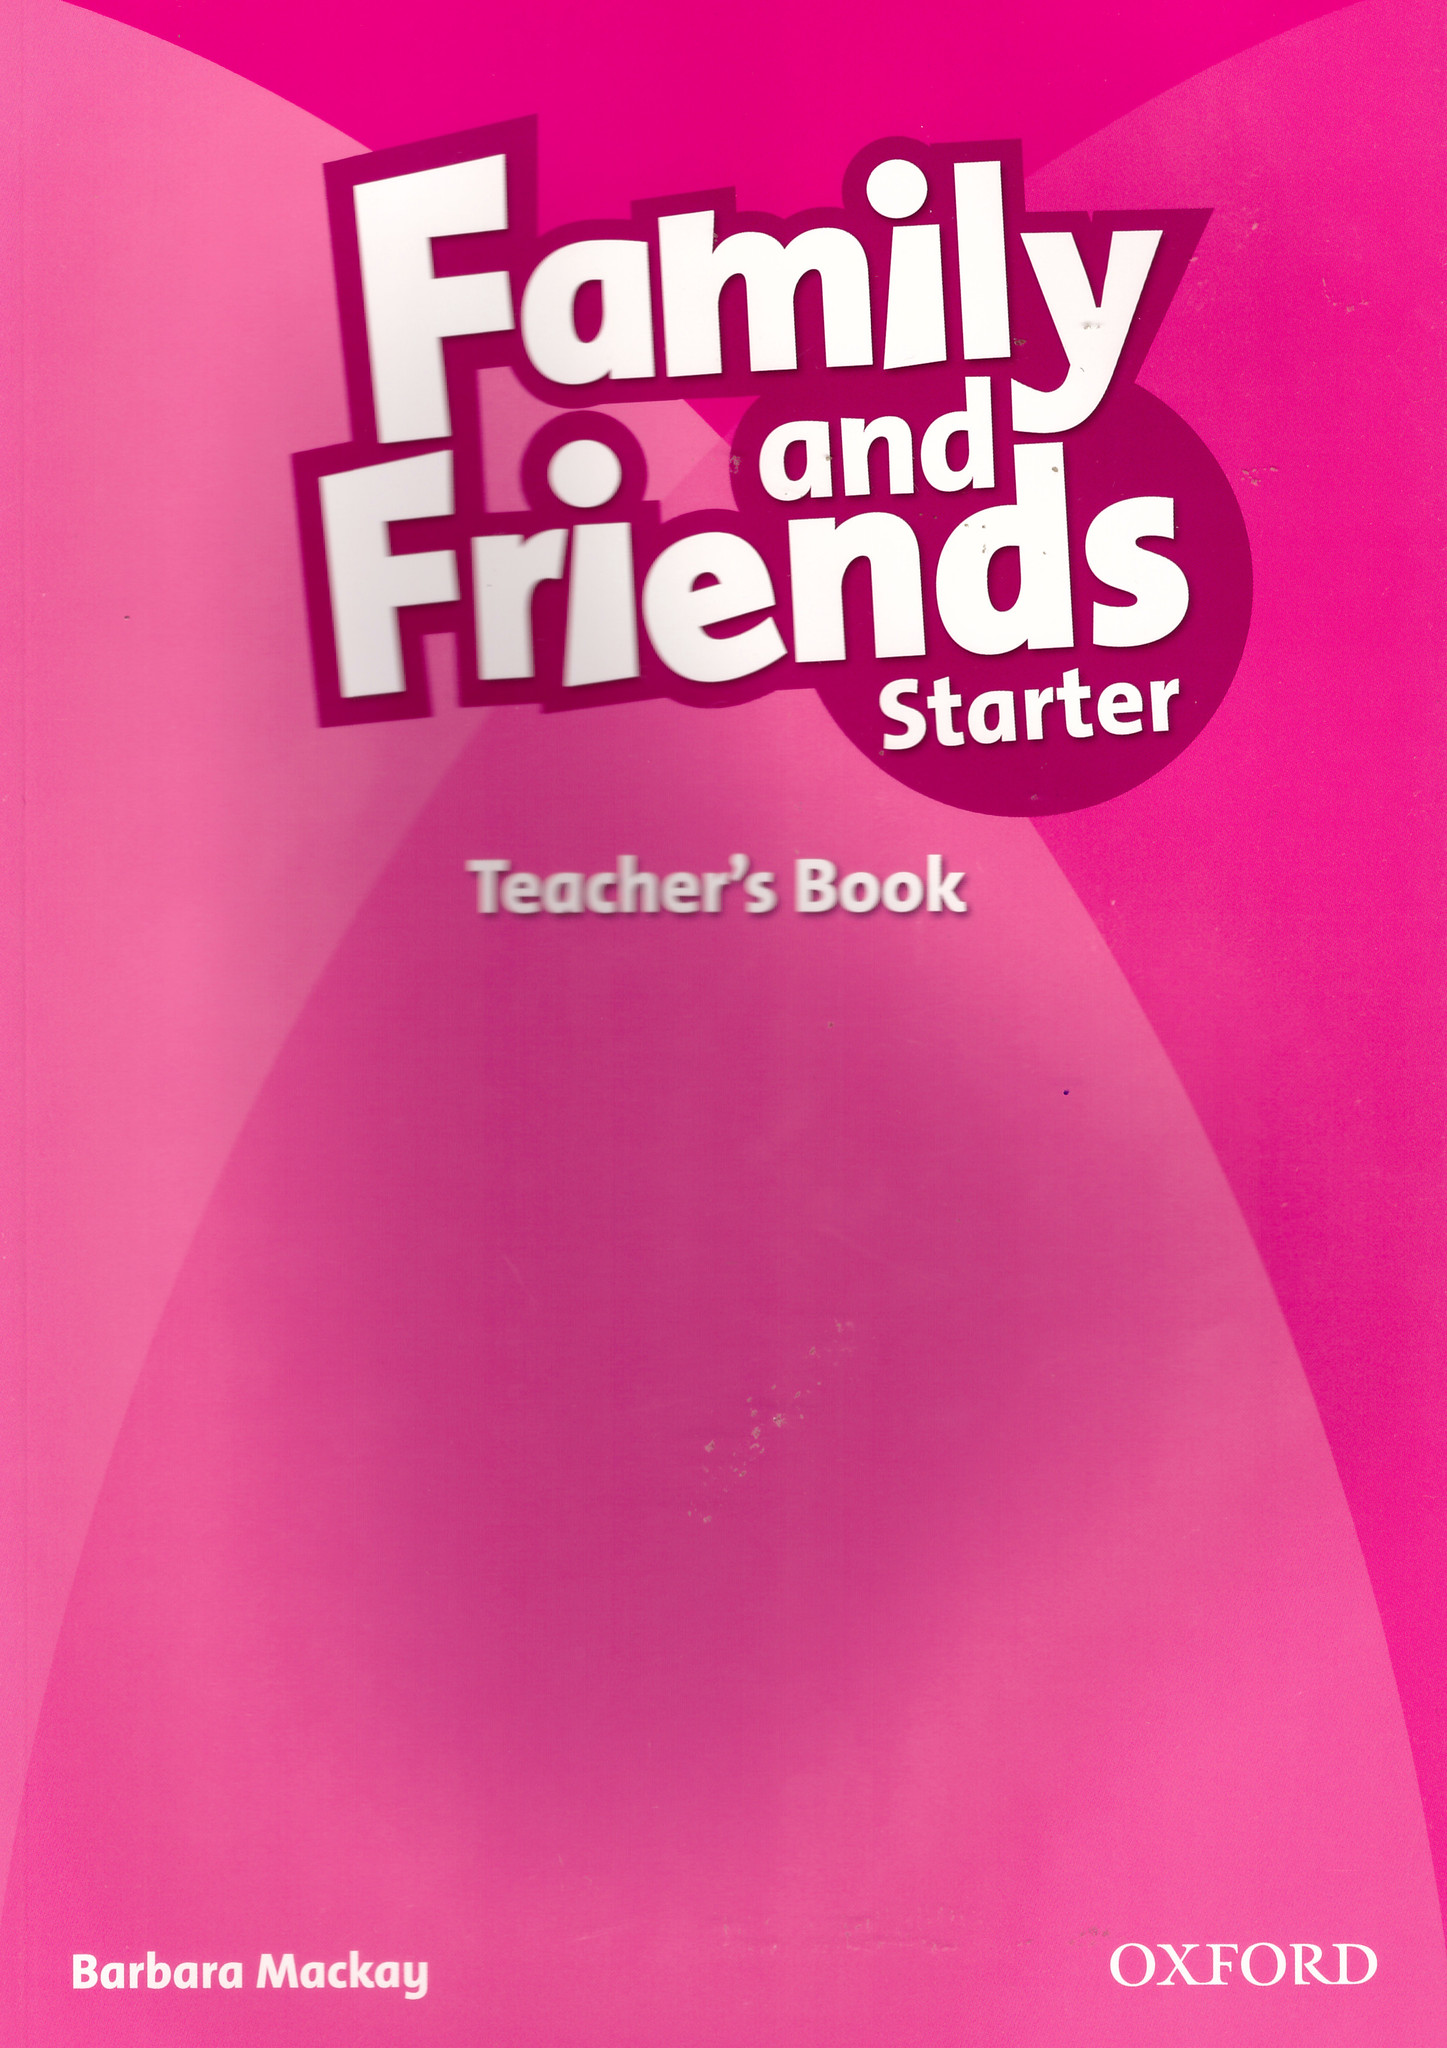 Books my family. Family and friends teacher's book ⁃ для учителей. Family and friends: Starter. Family and friends 1 Starter. Family and friends Starter book.